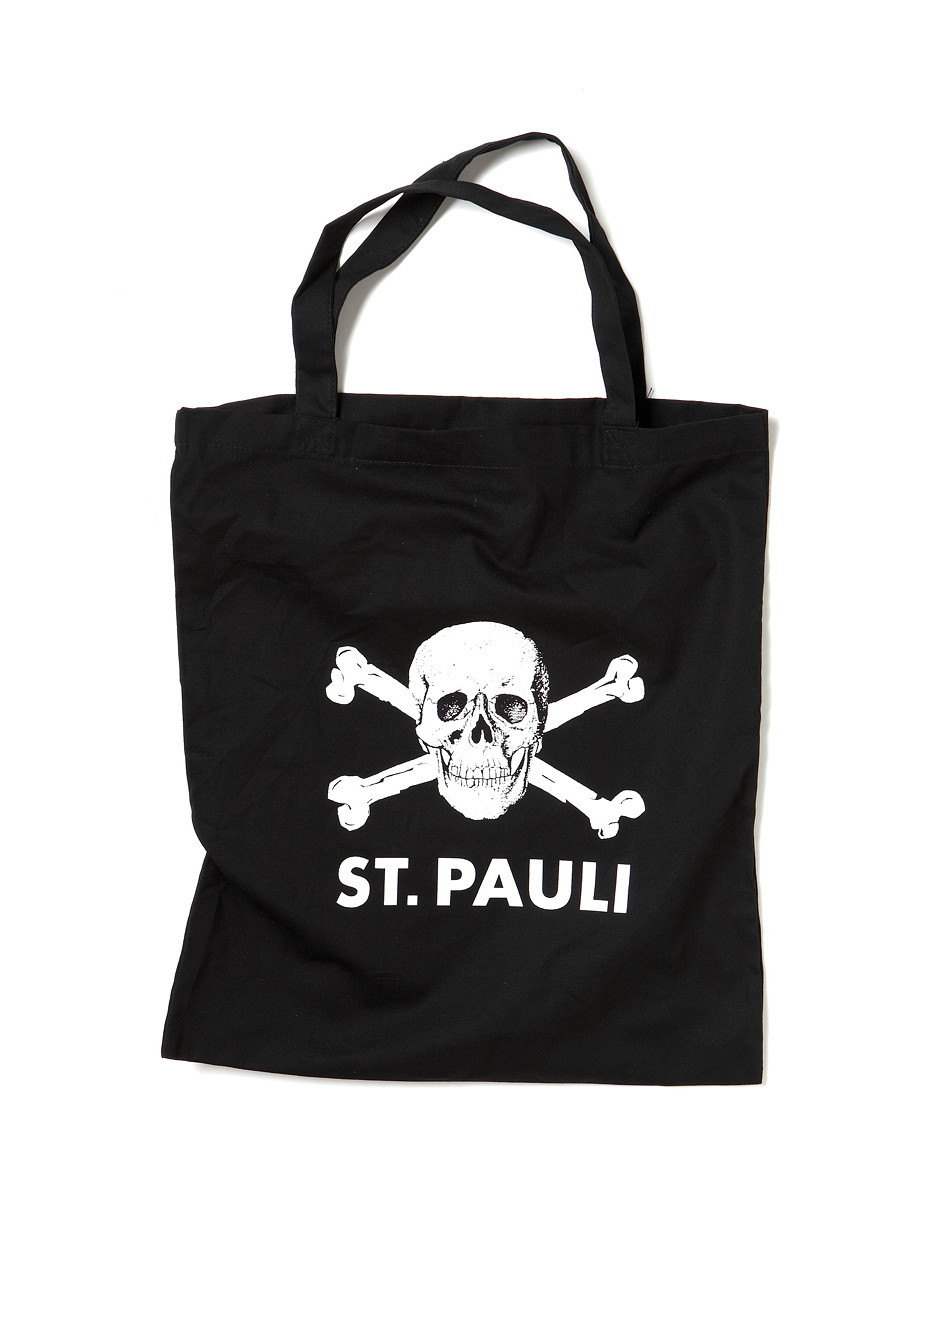 Skull and crossbones textile bag